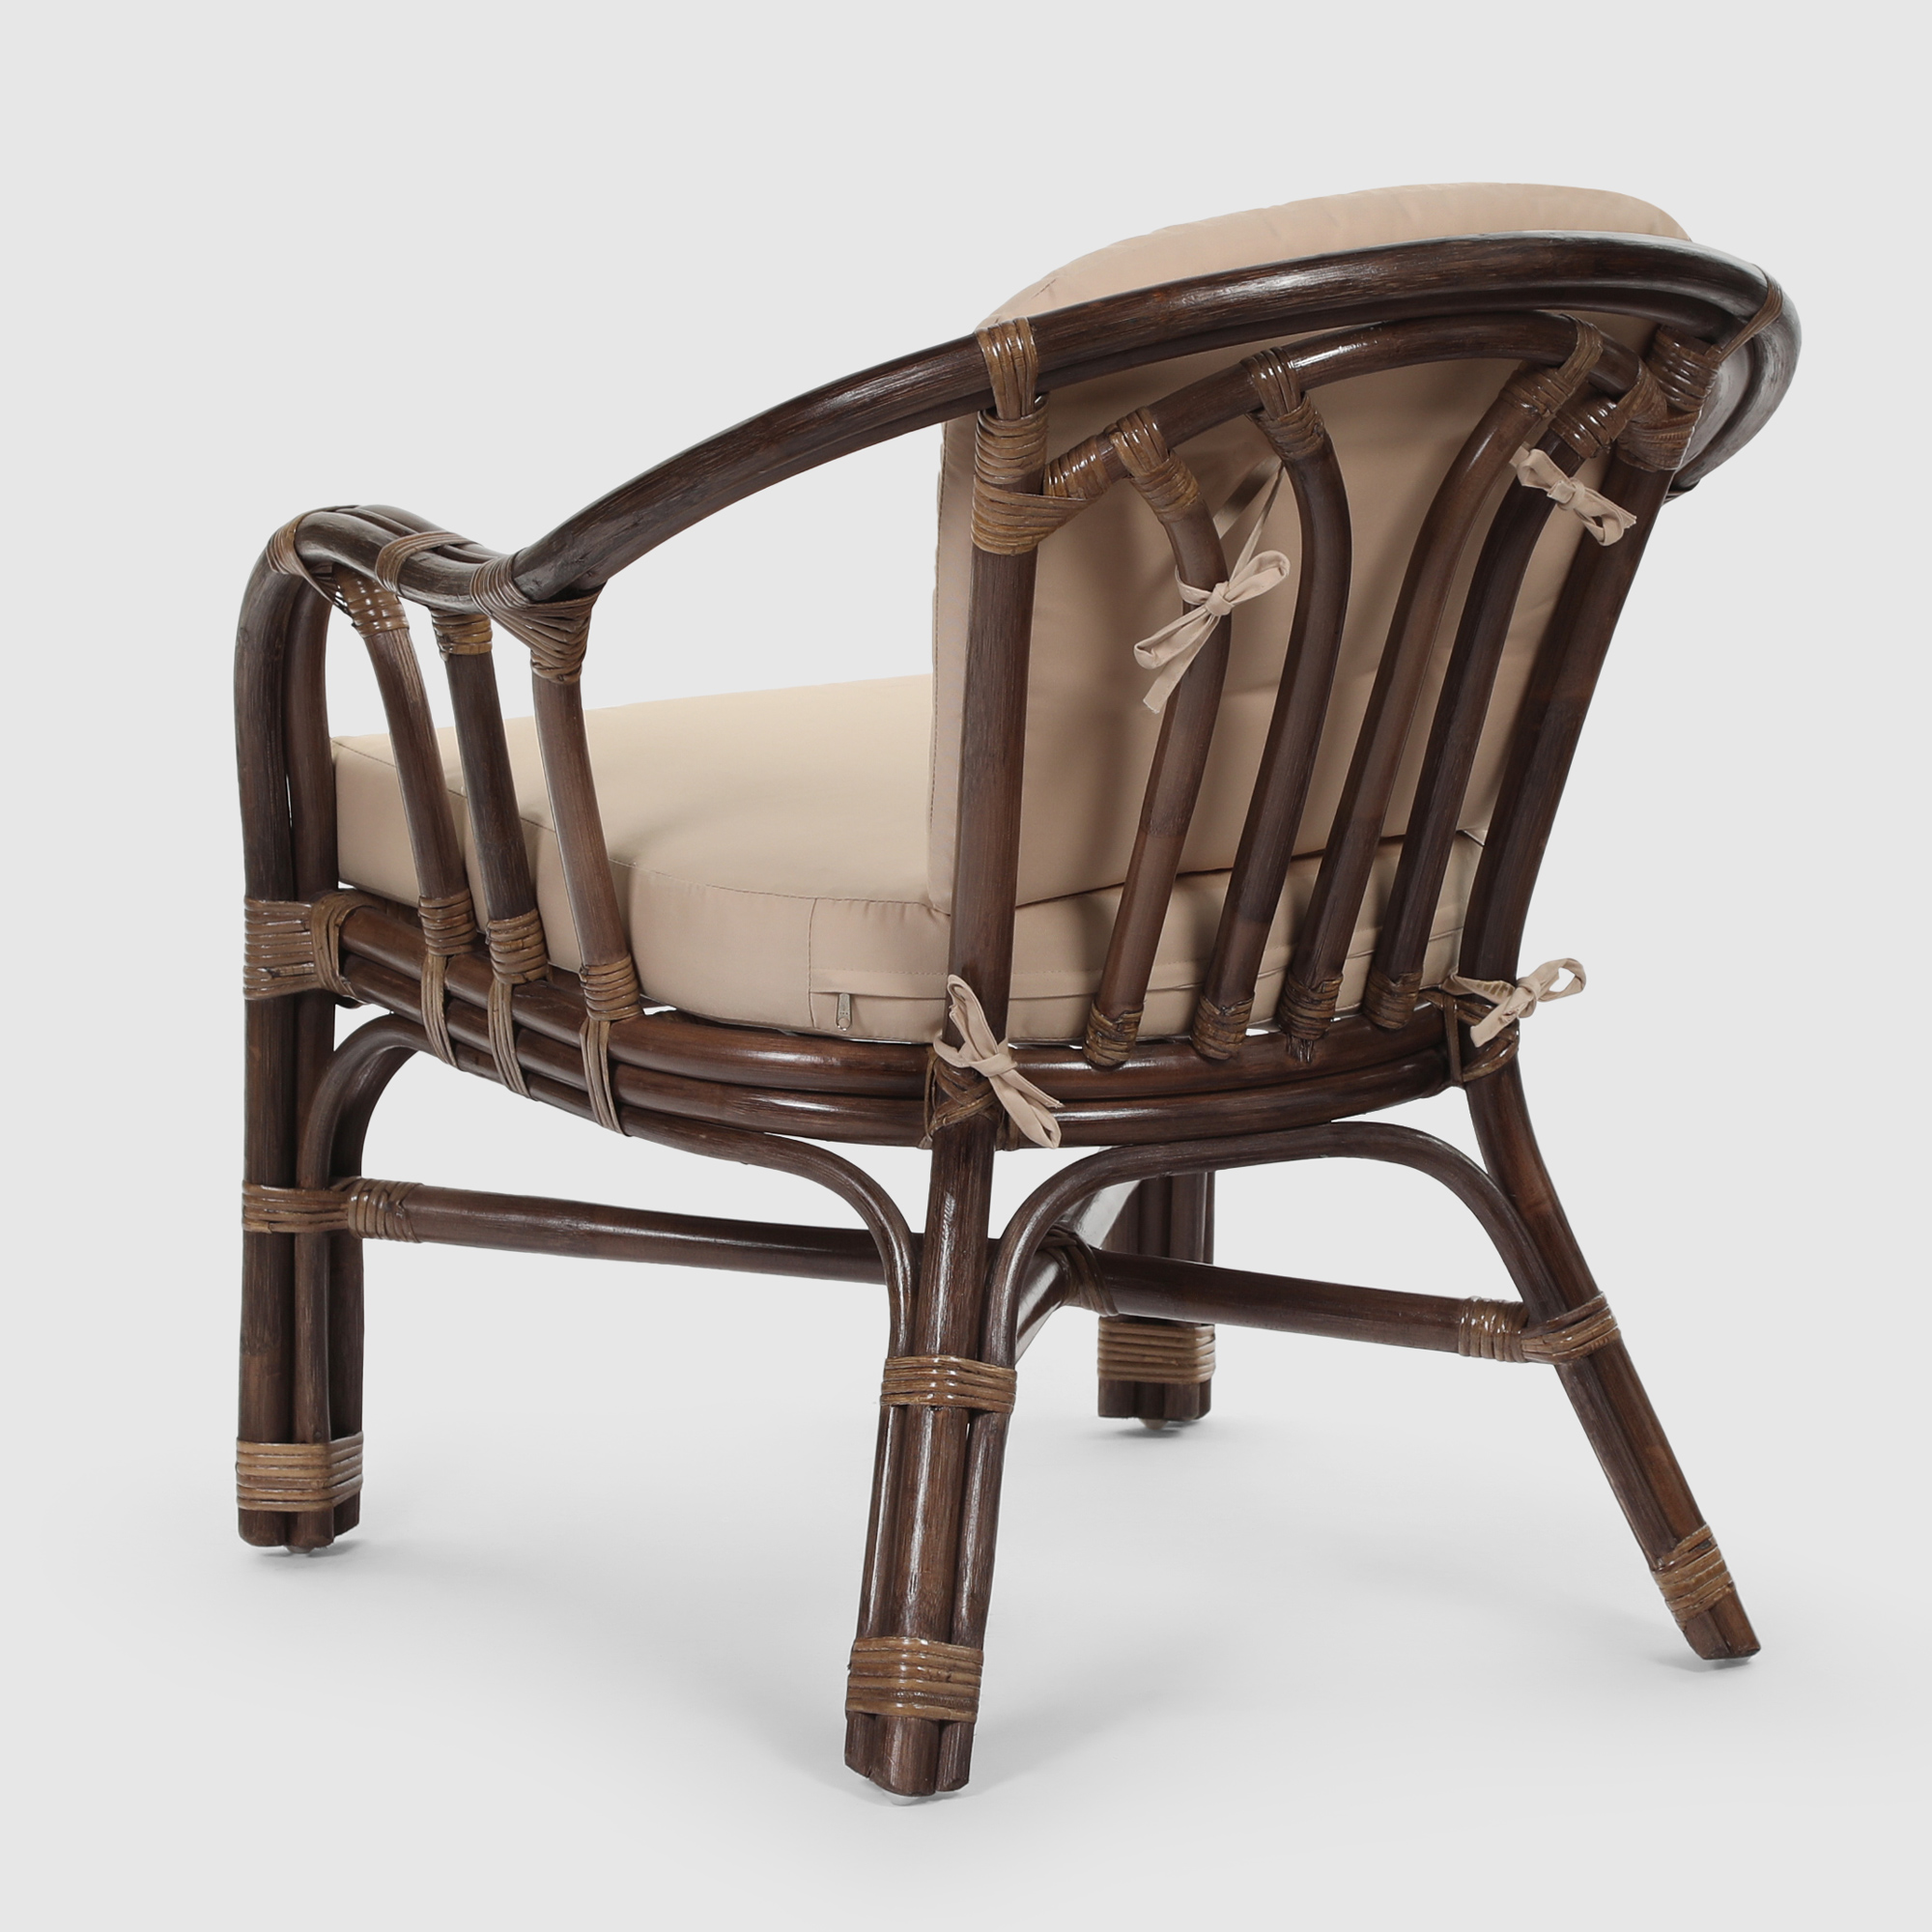 Комплект мебели Rattan grand San Marino medium brown 3 предмета, цвет коричневый, размер 60х67х70 см - фото 6